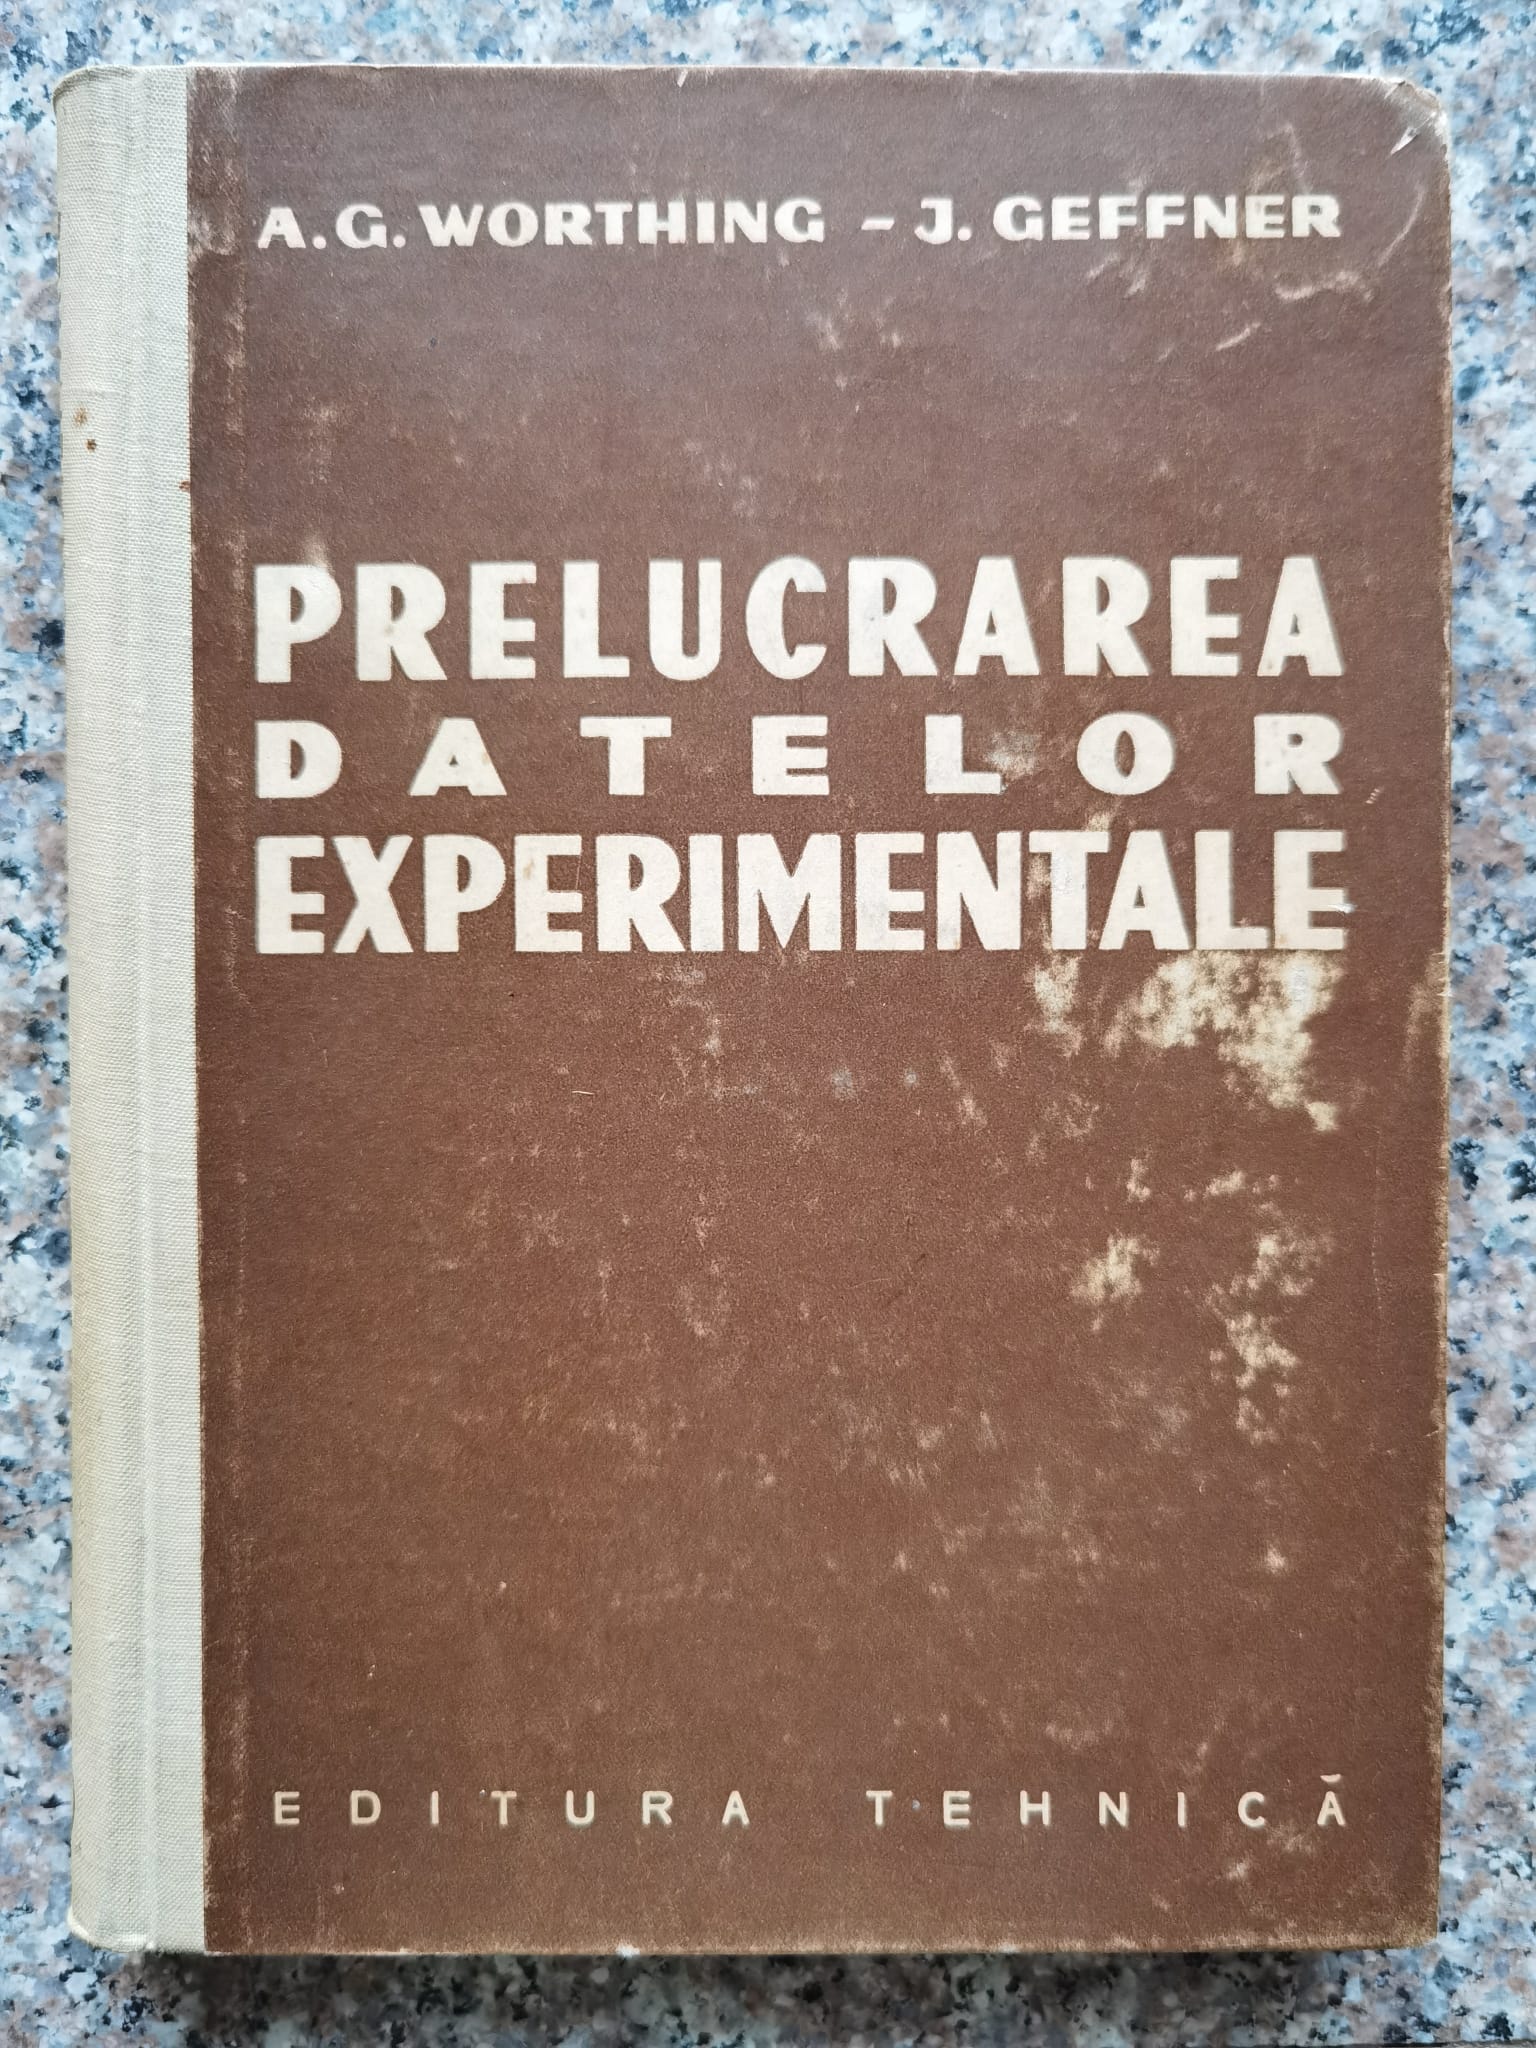 prelucrarea datelor experimentale                                                                    a. g. worthing, j. geffner                                                                          